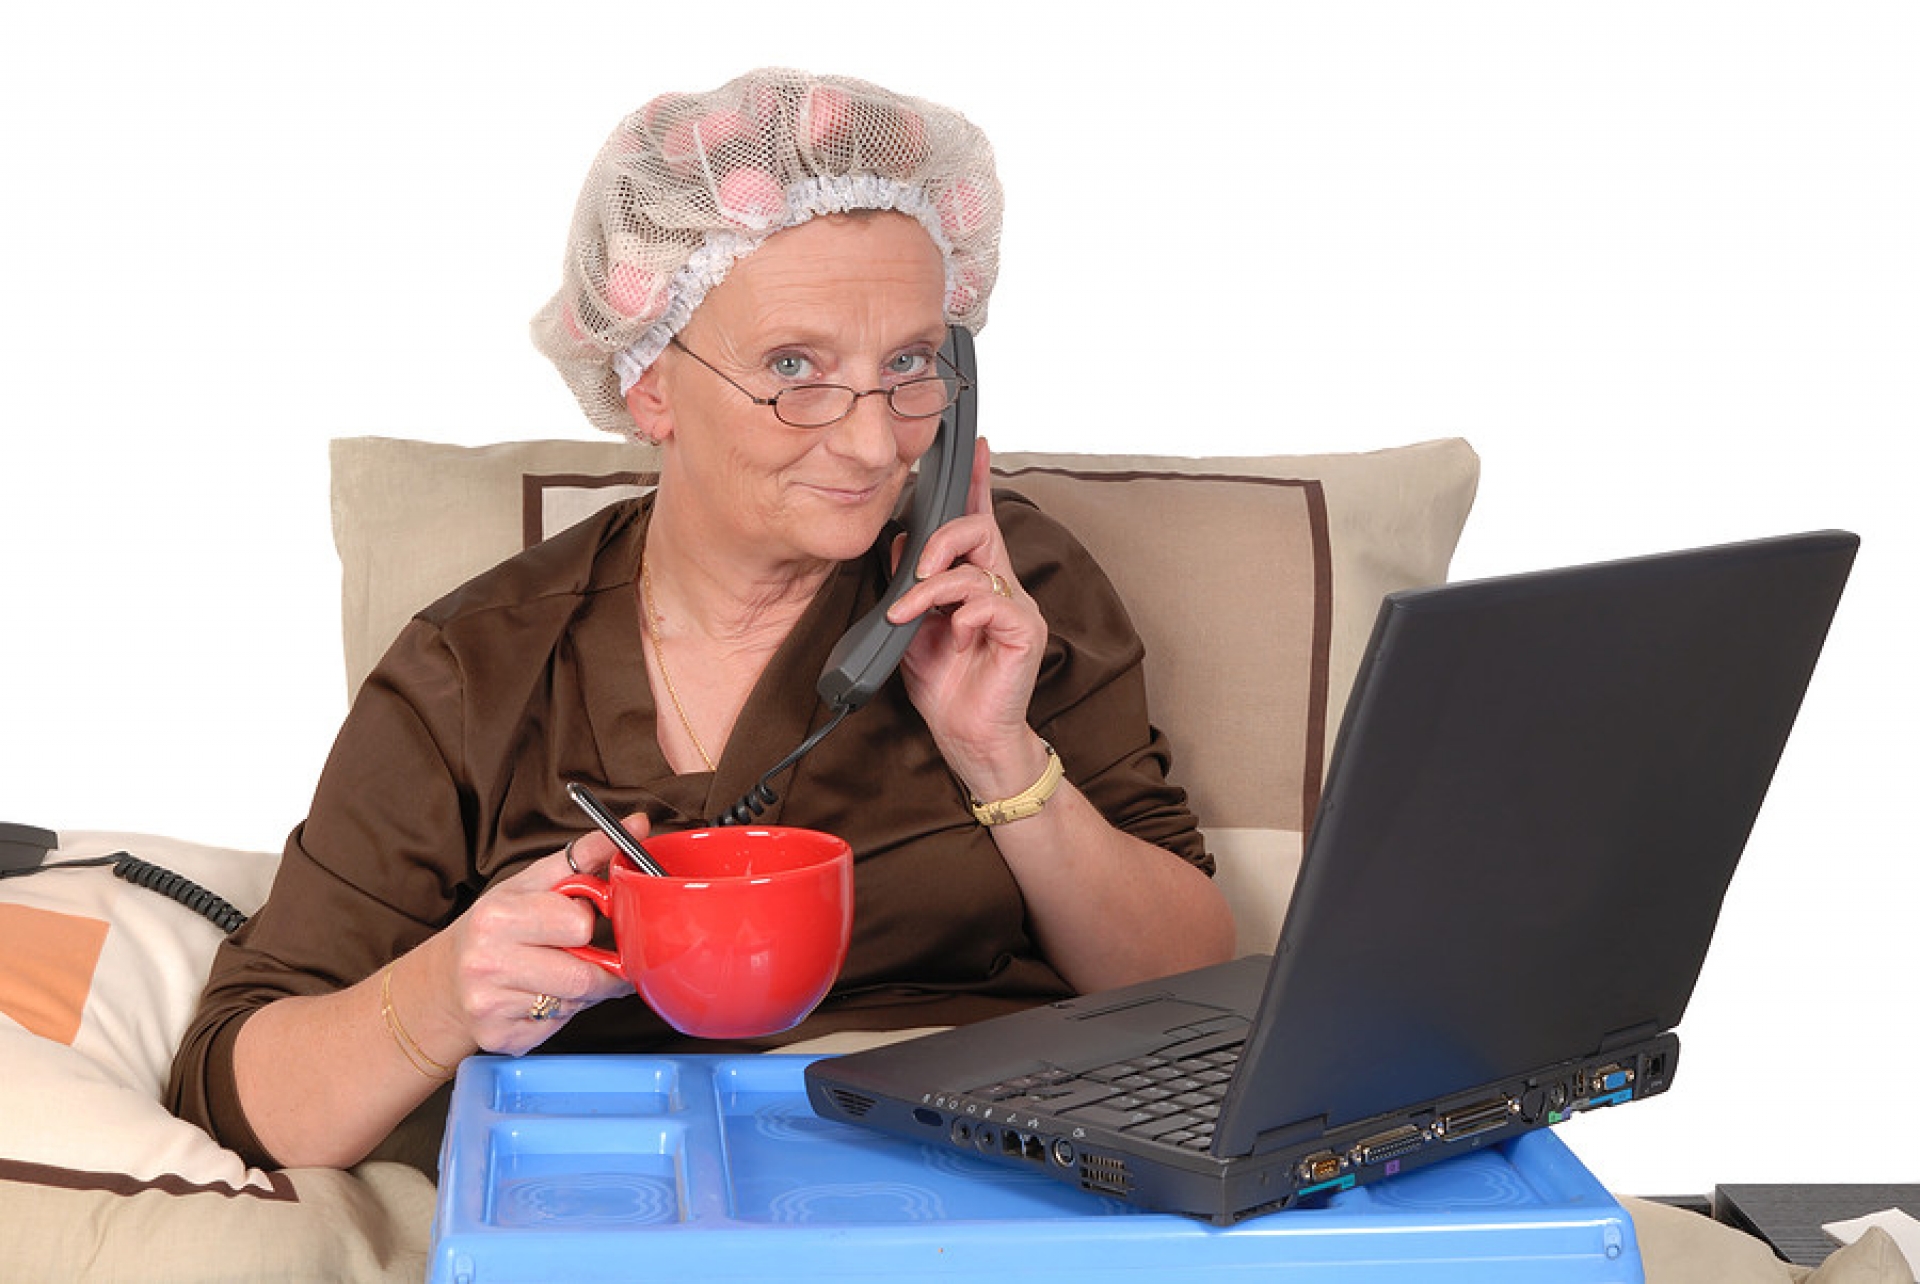 Картинки с тетками. Бабушка и компьютер. Бабушка на работе. Бабка с ноутбуком. Женщина в возрасте за компьютером.